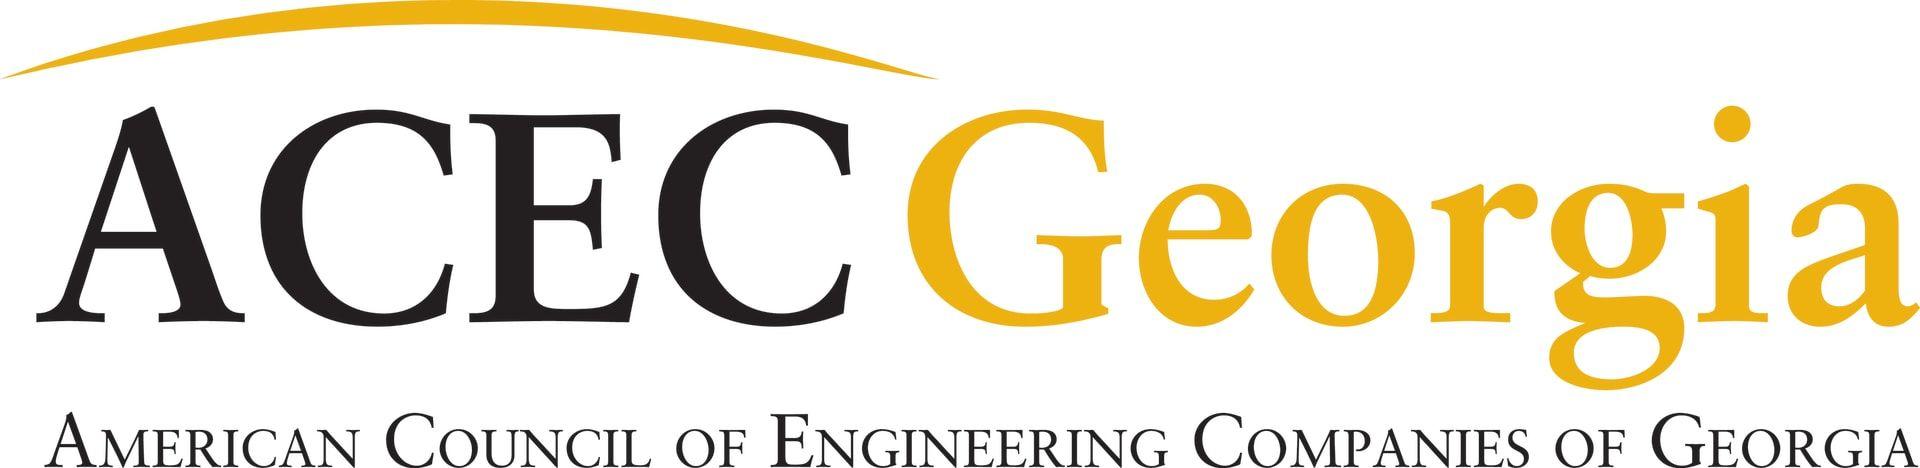 ACEC Logo - Home Council of Engineering Companies of Georgia, GA